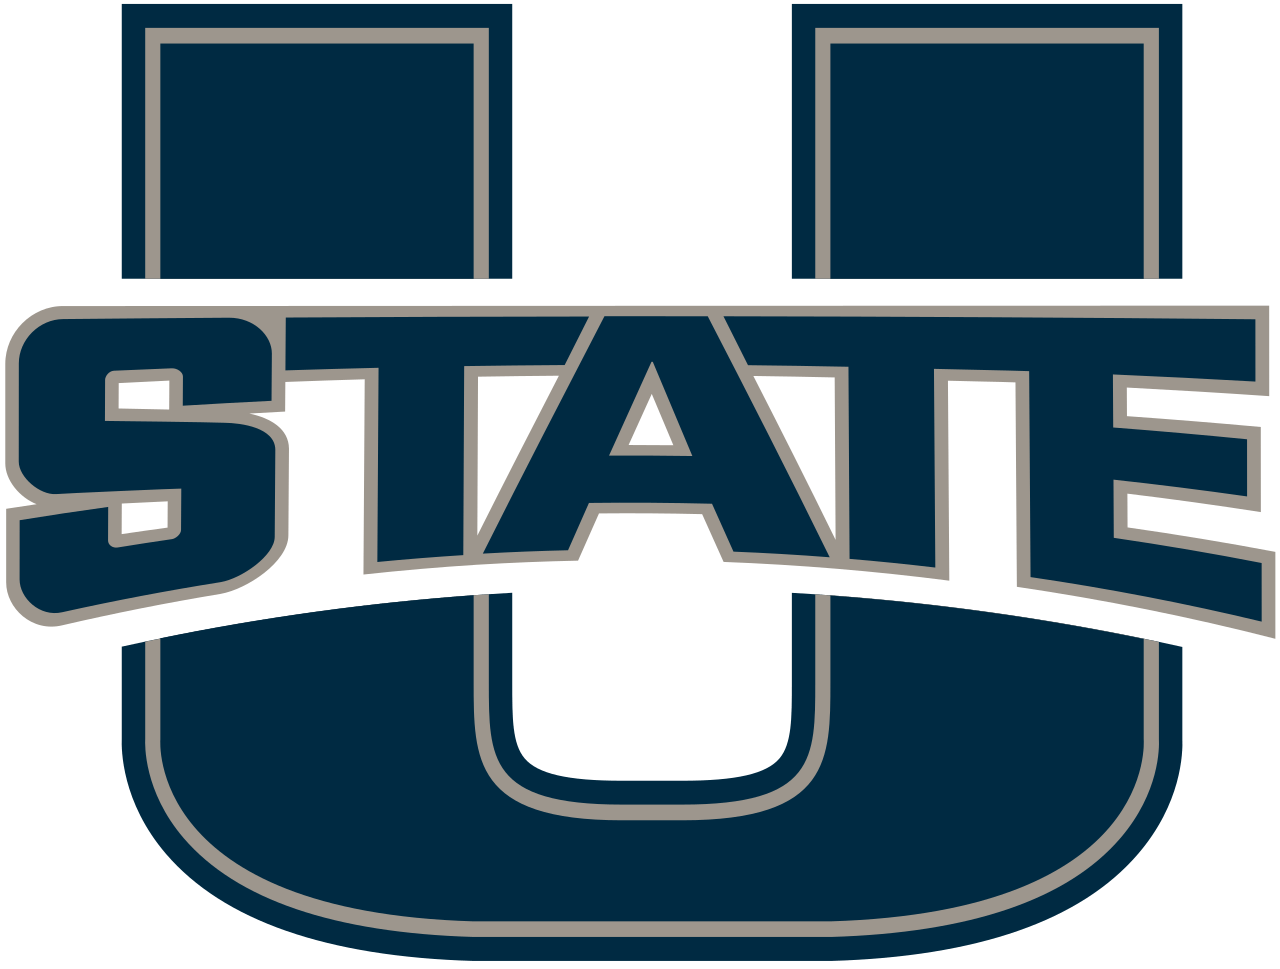 Aggies Logo - File:Utah State Aggies logo.svg - Wikimedia Commons